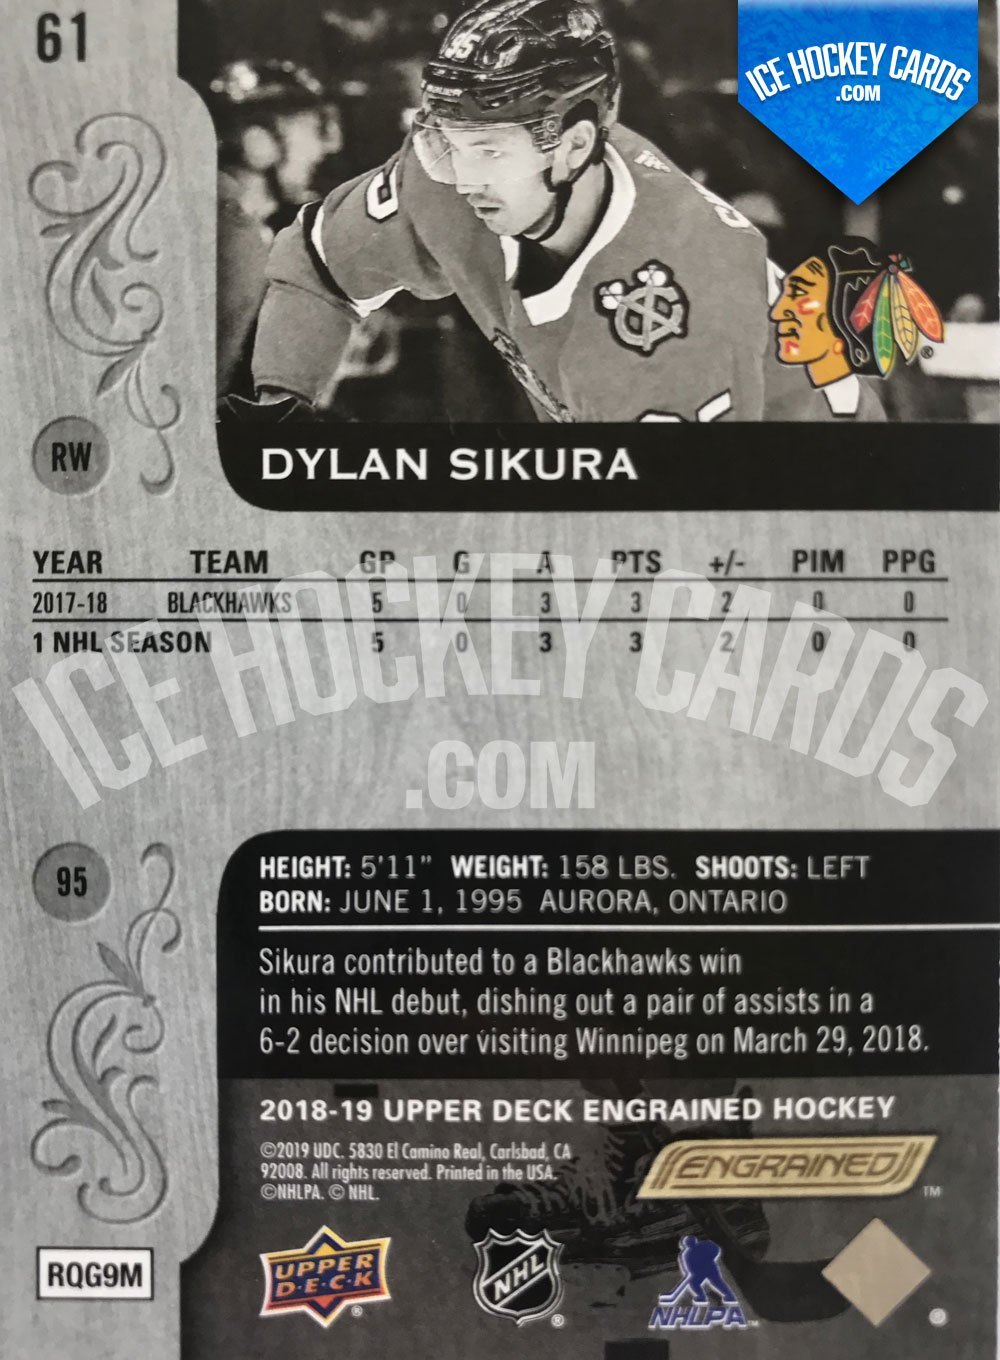 Upper Deck - Engrained 18-19 - Dylan Sikura Rookie Card 42 of 49 back